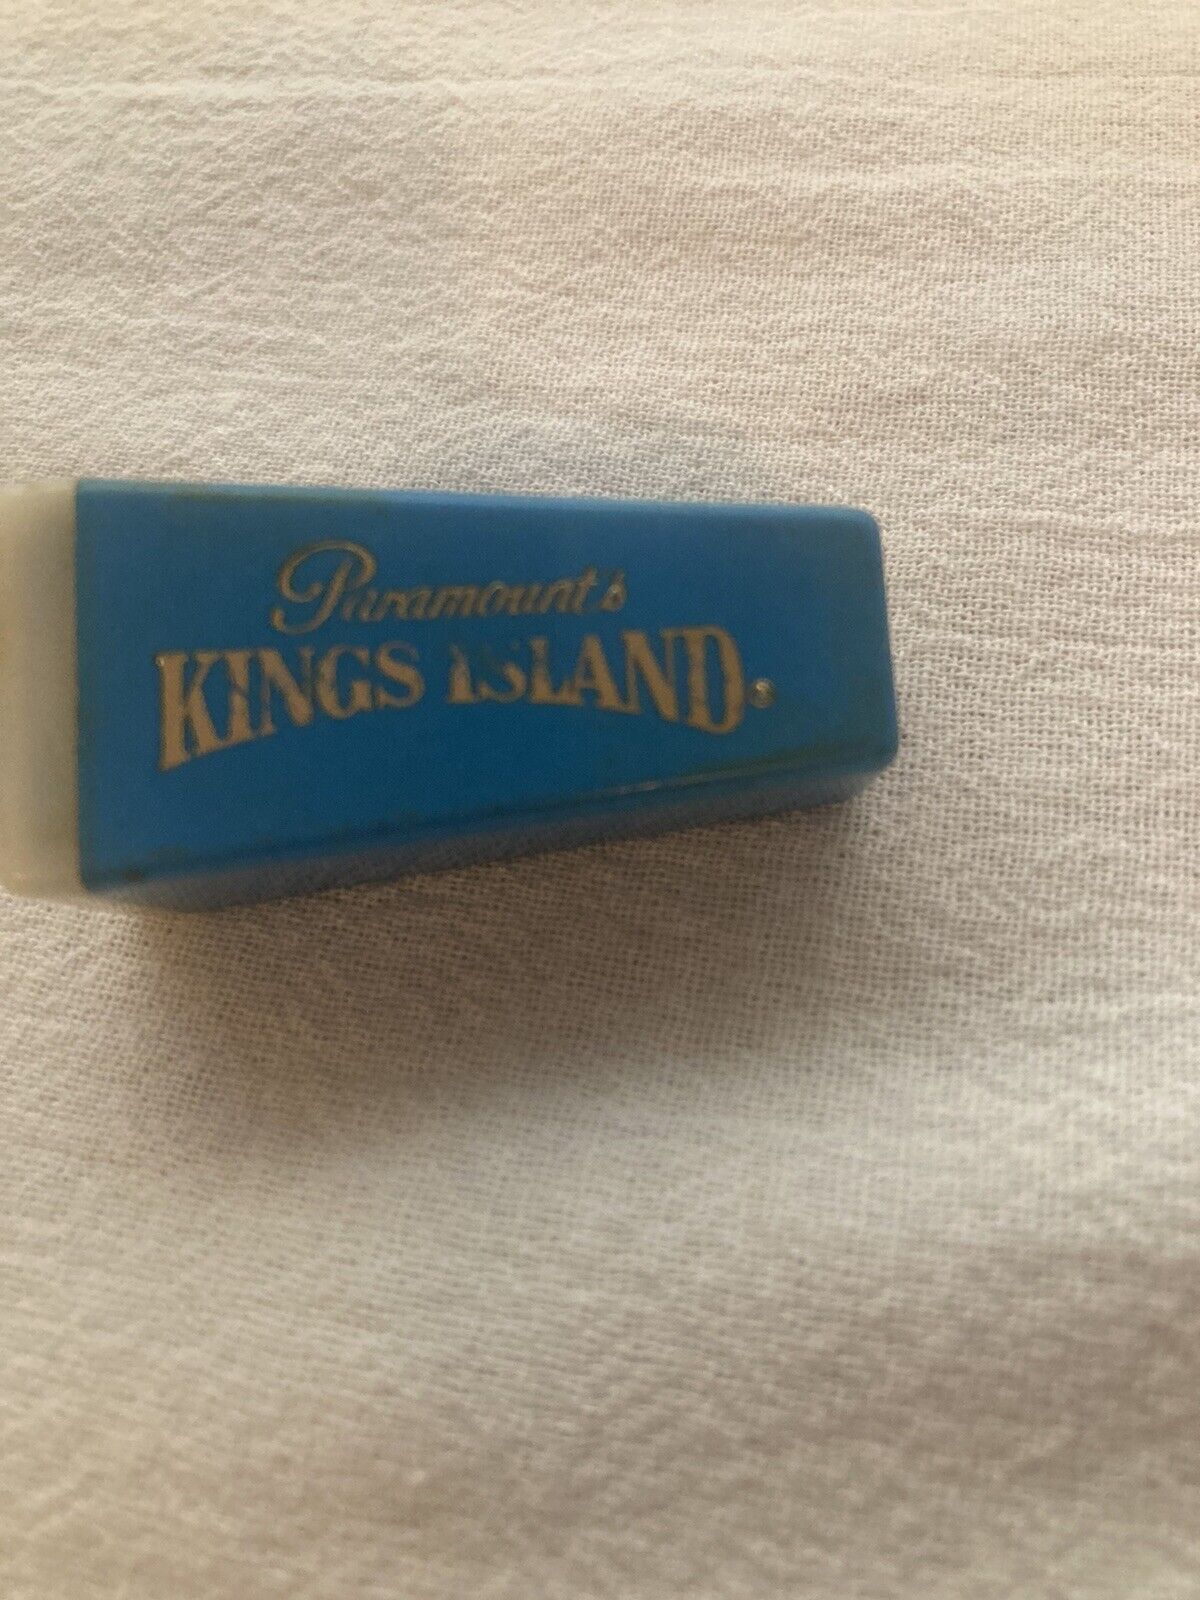 Vintage 1980s King’s Island Theme Park Photo Viewer Keychain Couple Dominion